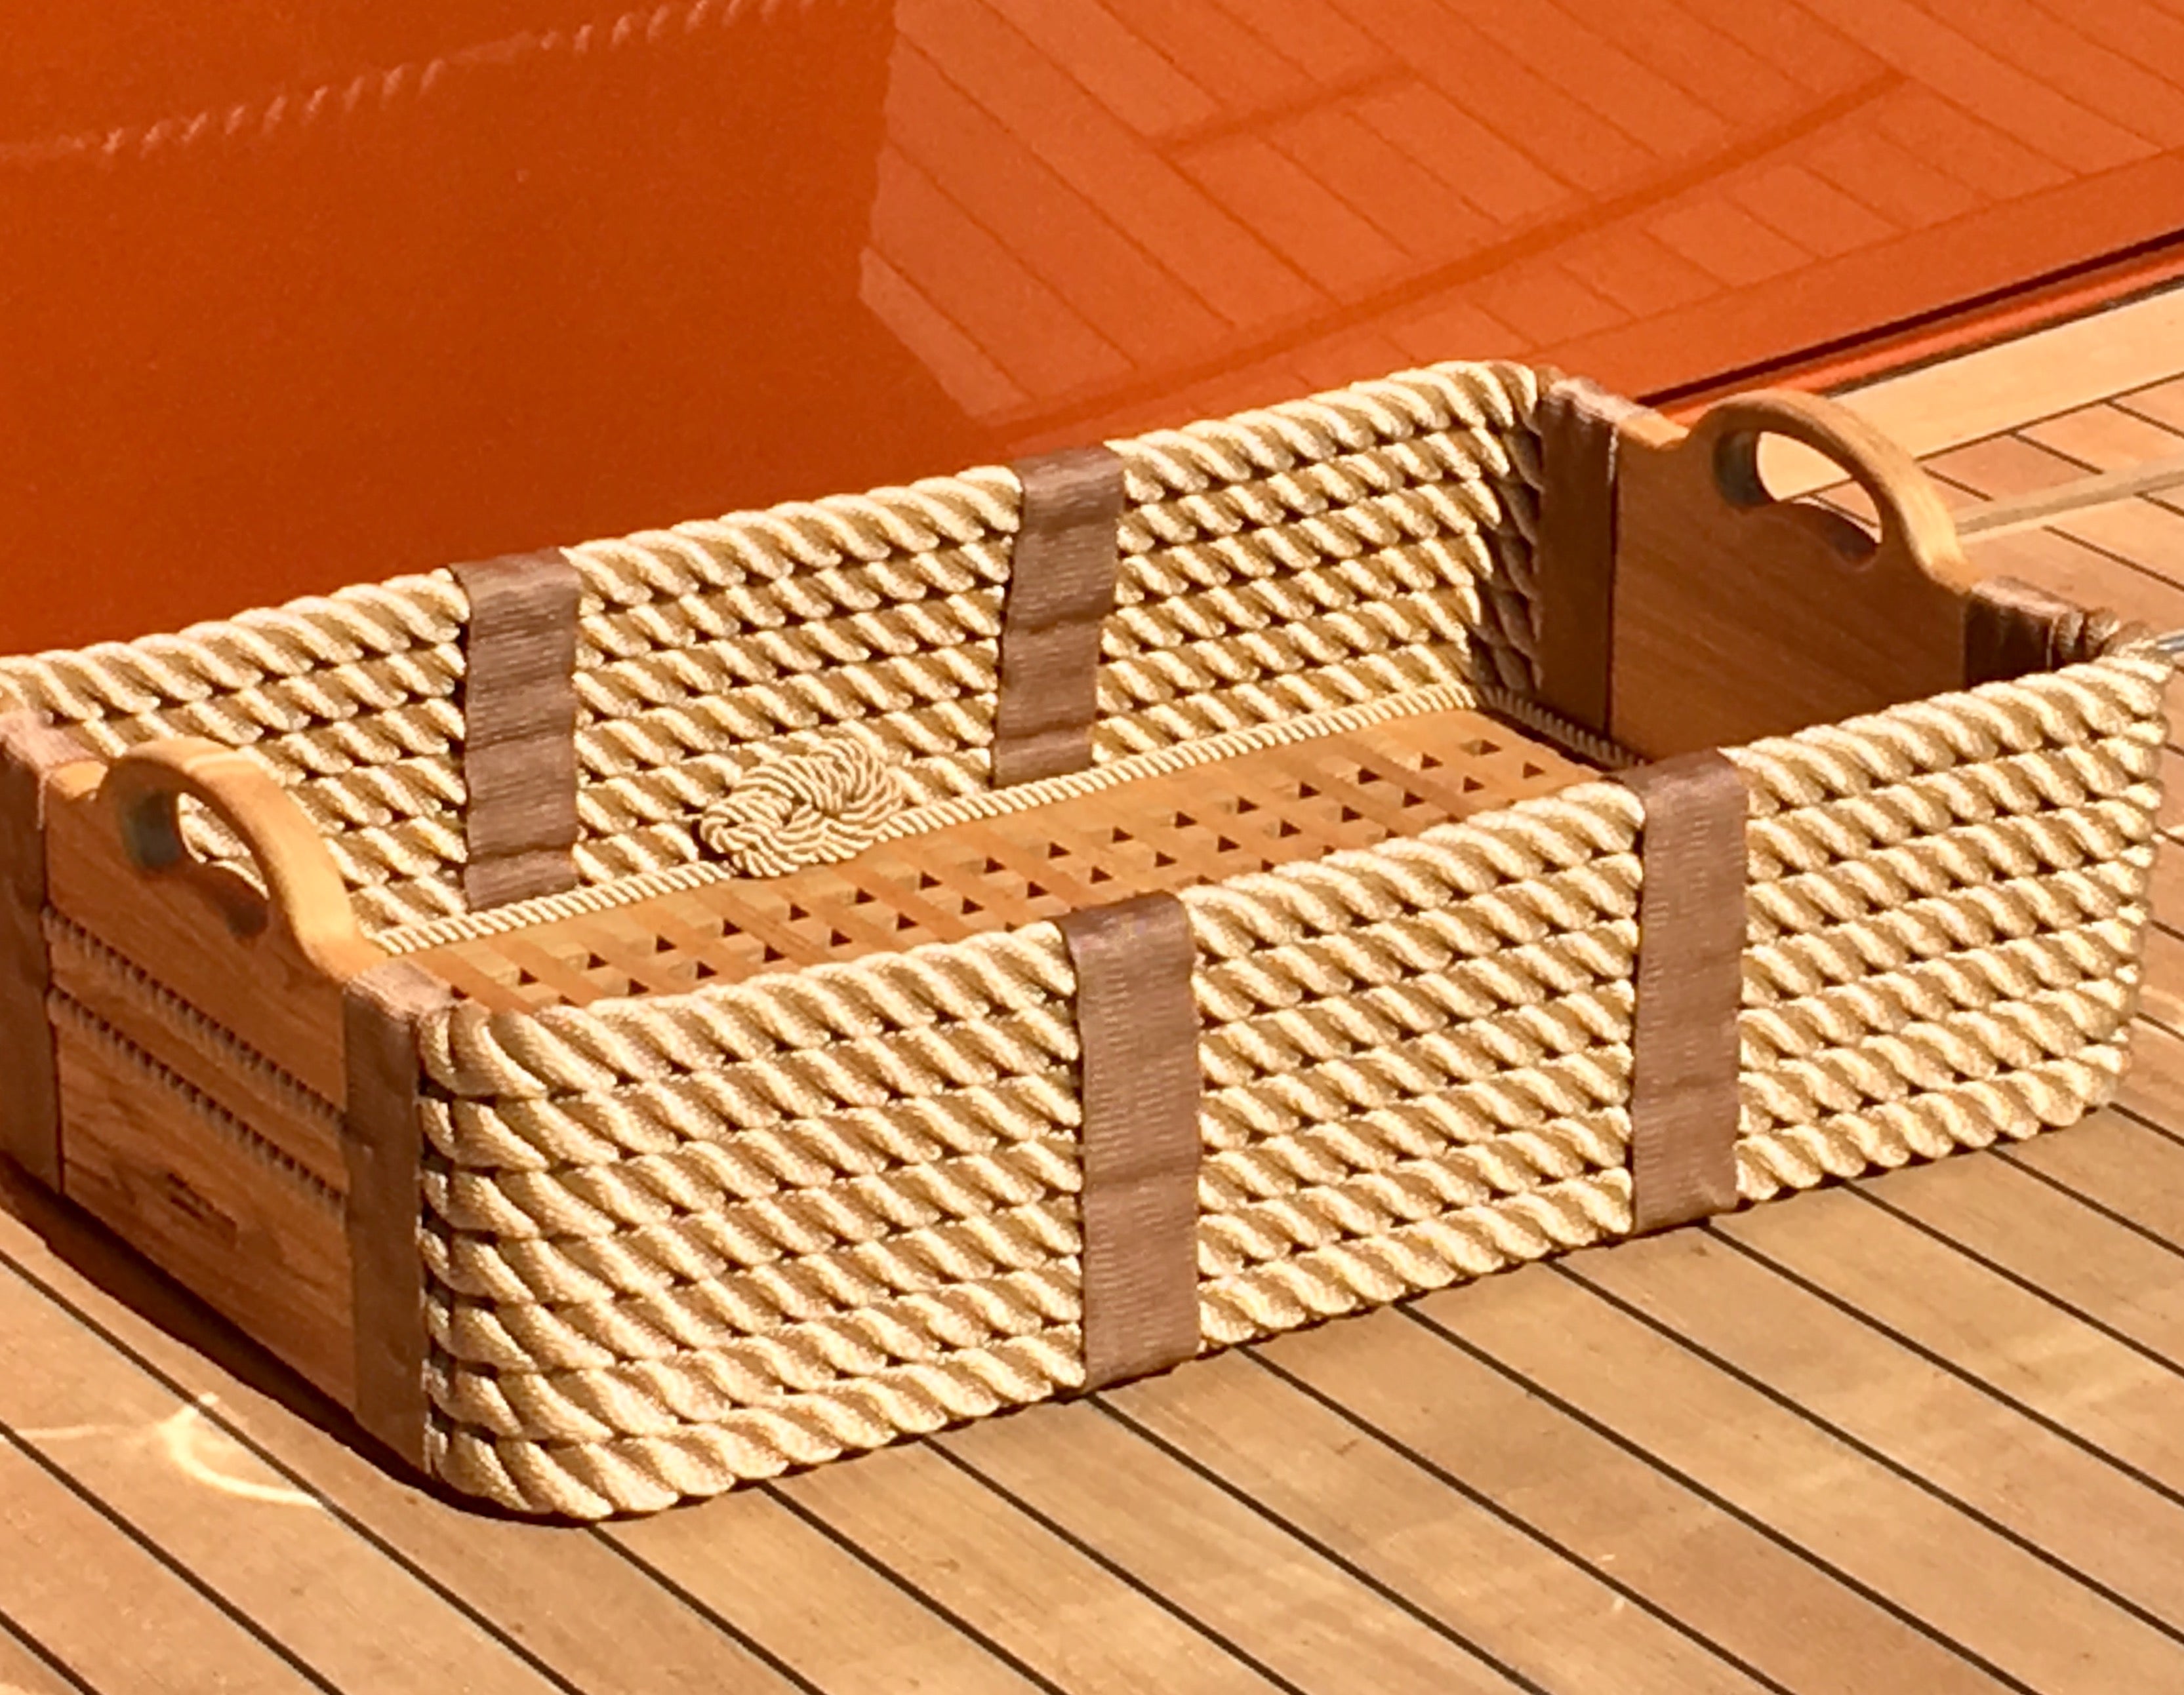 Rope and teak yacht shoe basket. Handmade in Italy